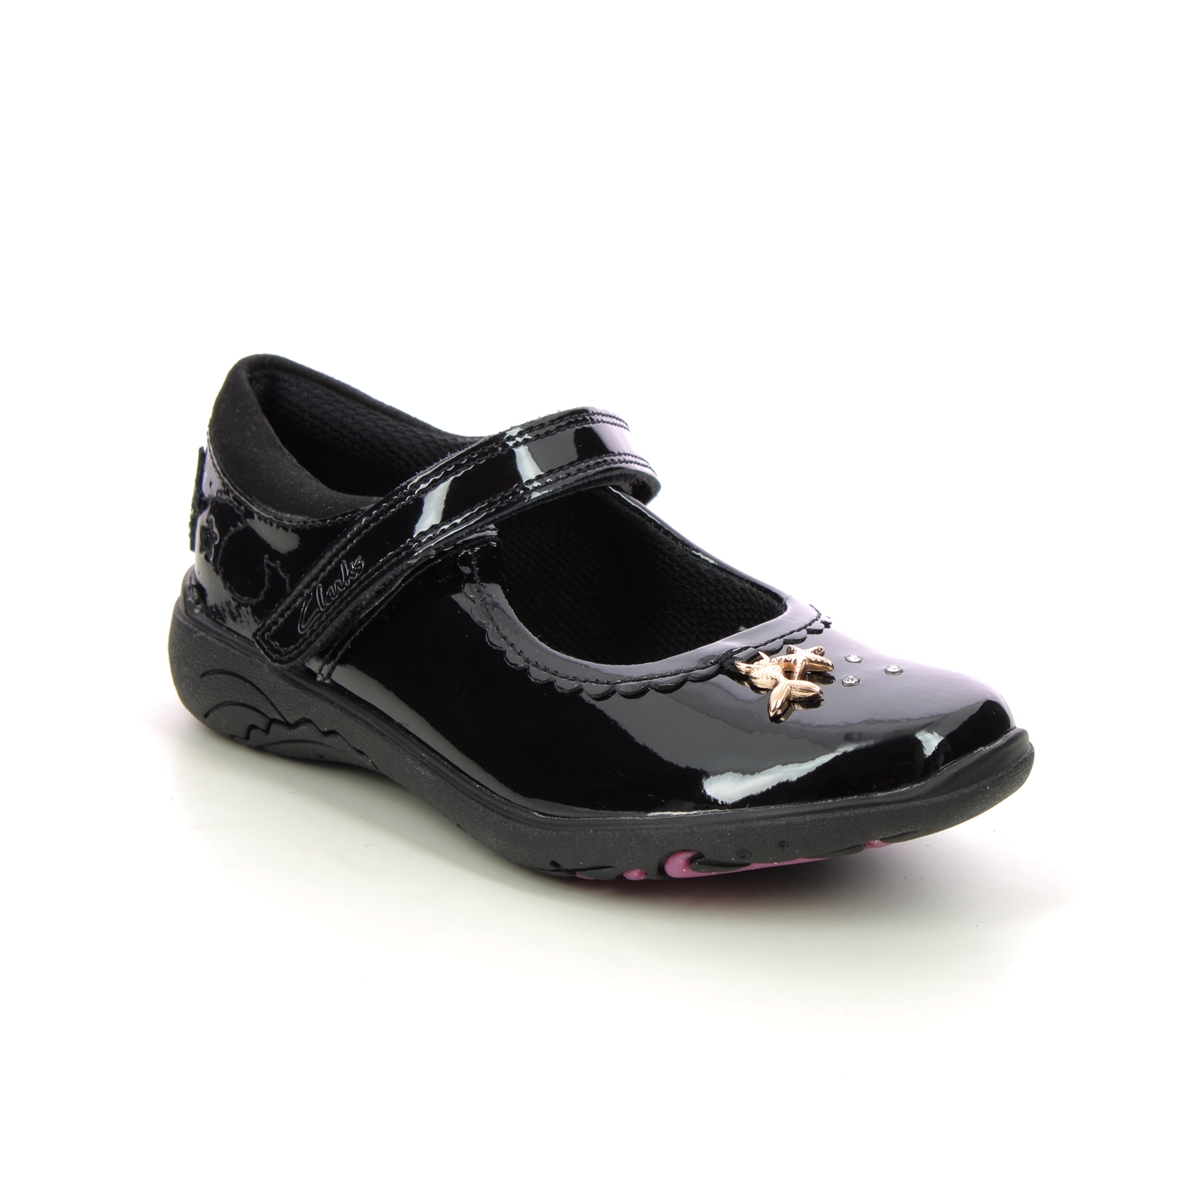 Clarks Relda Sea K Mary Jane Black Patent Kids Girls School Shoes 722417G In Size 12 In Plain Black Patent G Width Fitting For School For kids